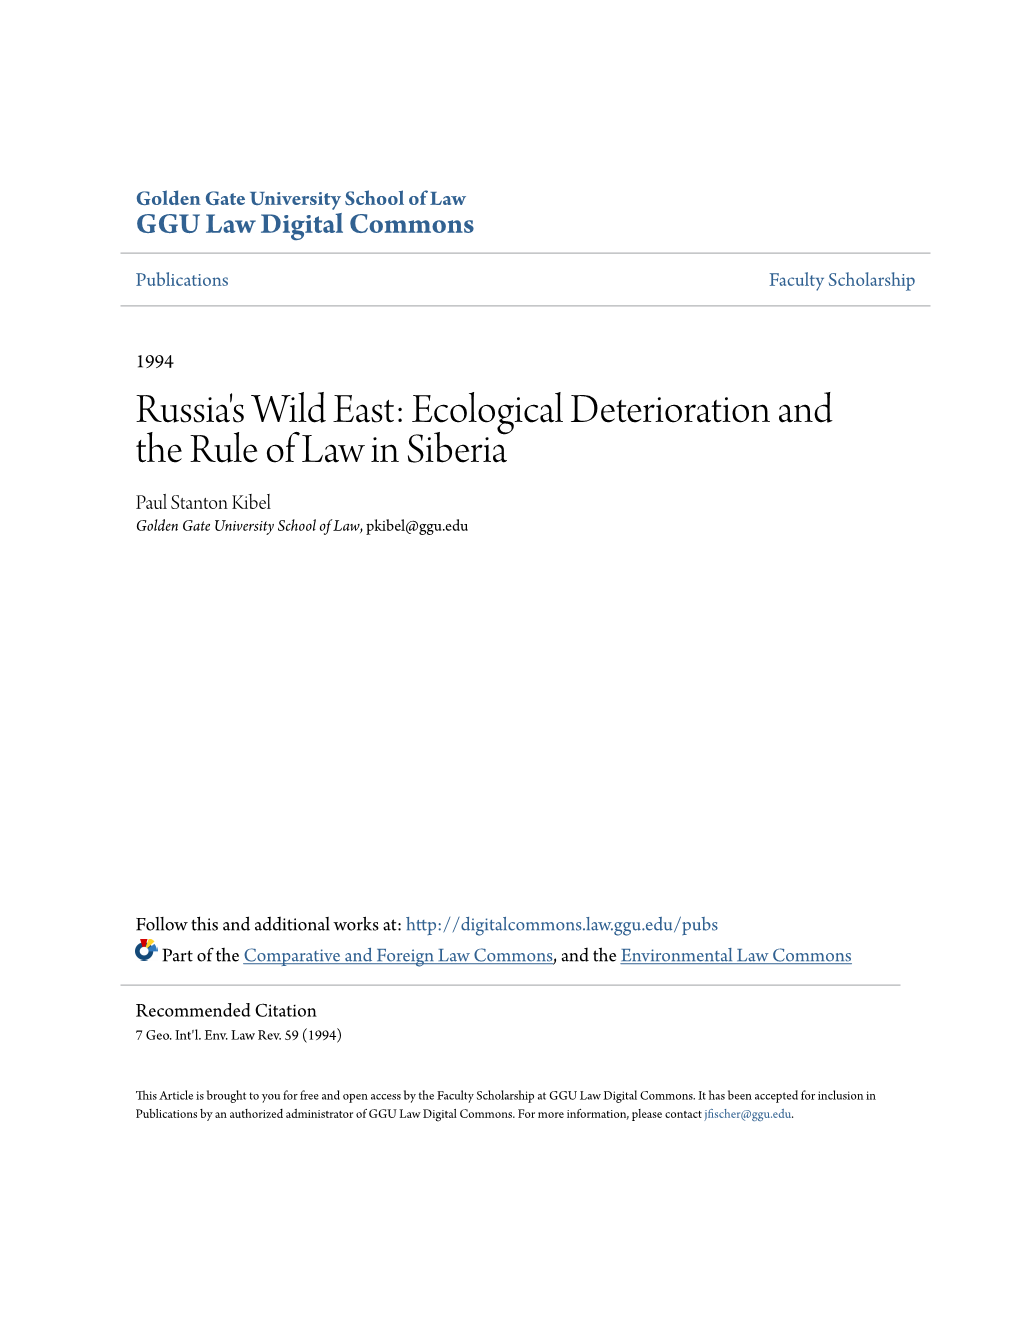 Russia's Wild East: Ecological Deterioration and the Rule of Law in Siberia Paul Stanton Kibel Golden Gate University School of Law, Pkibel@Ggu.Edu